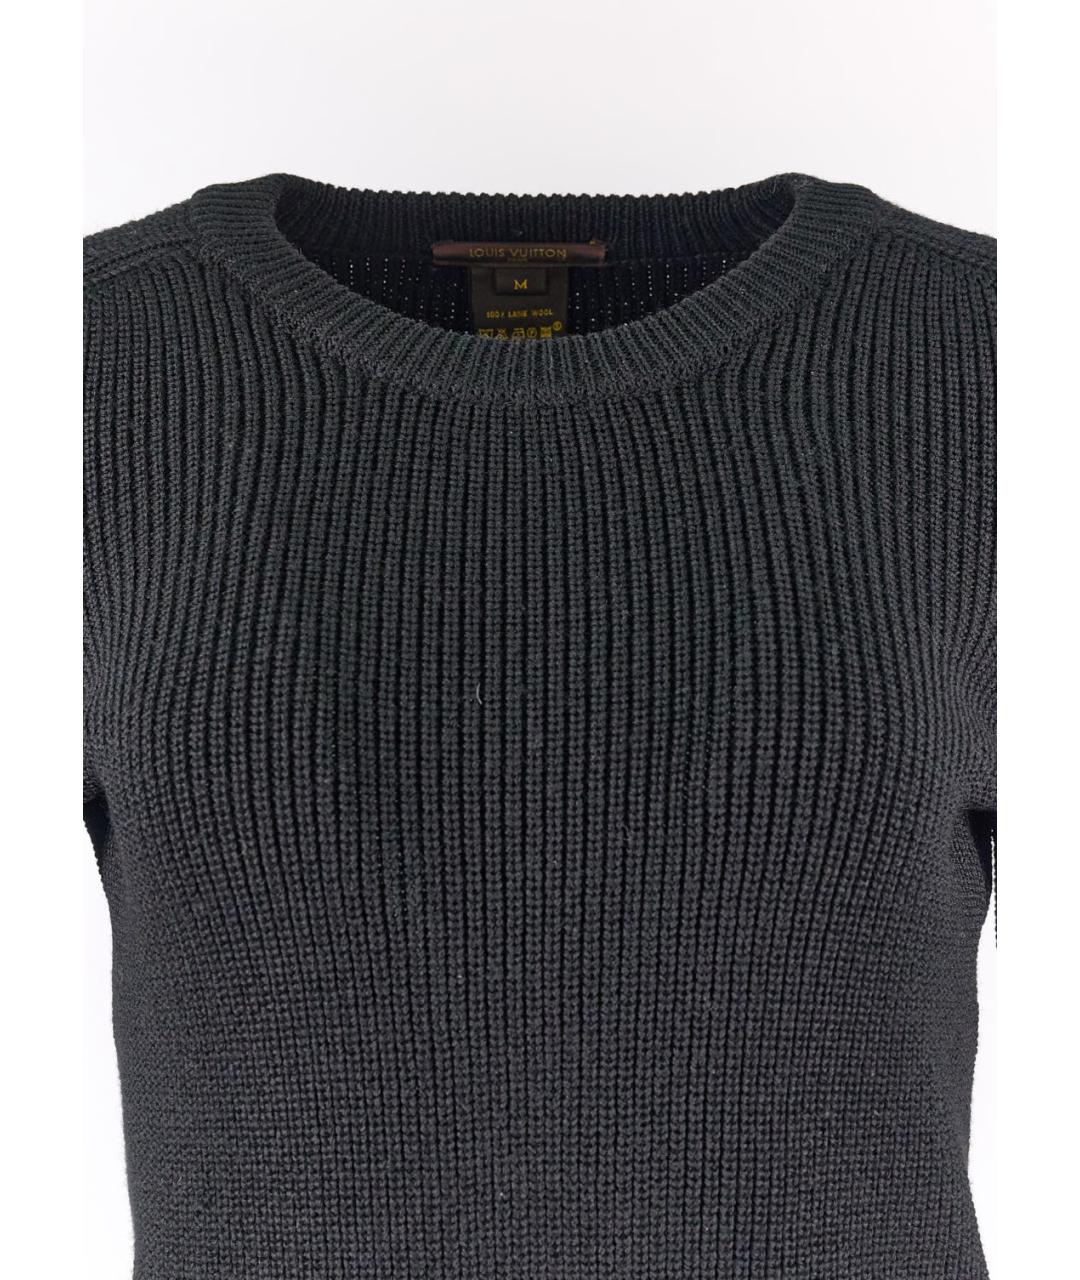 LOUIS VUITTON PRE-OWNED Черный шерстяной джемпер / свитер, фото 4